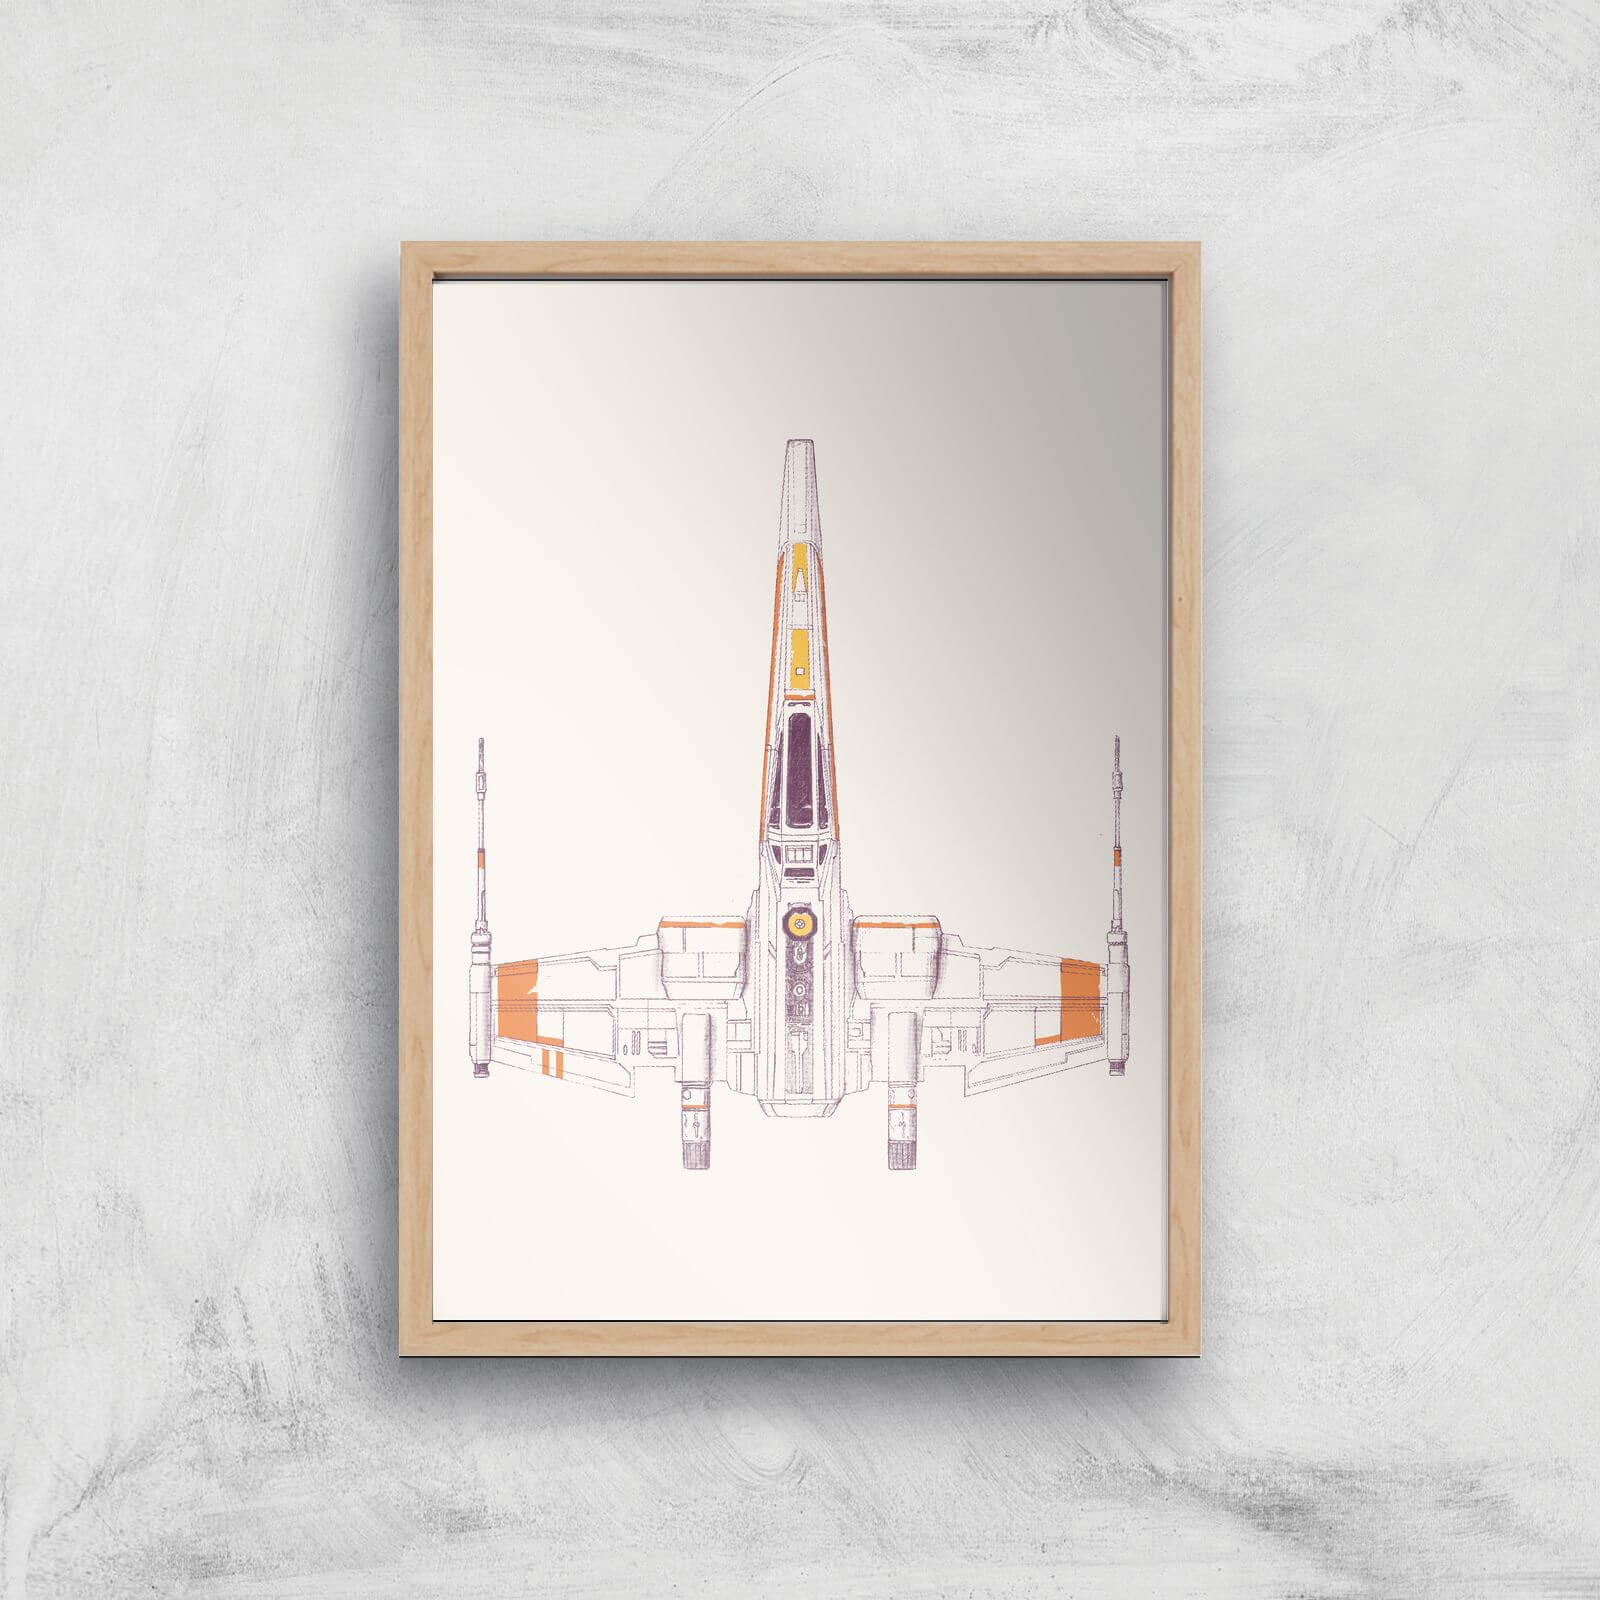 Space Ship Giclee Art Print - A4 - Wooden Frame